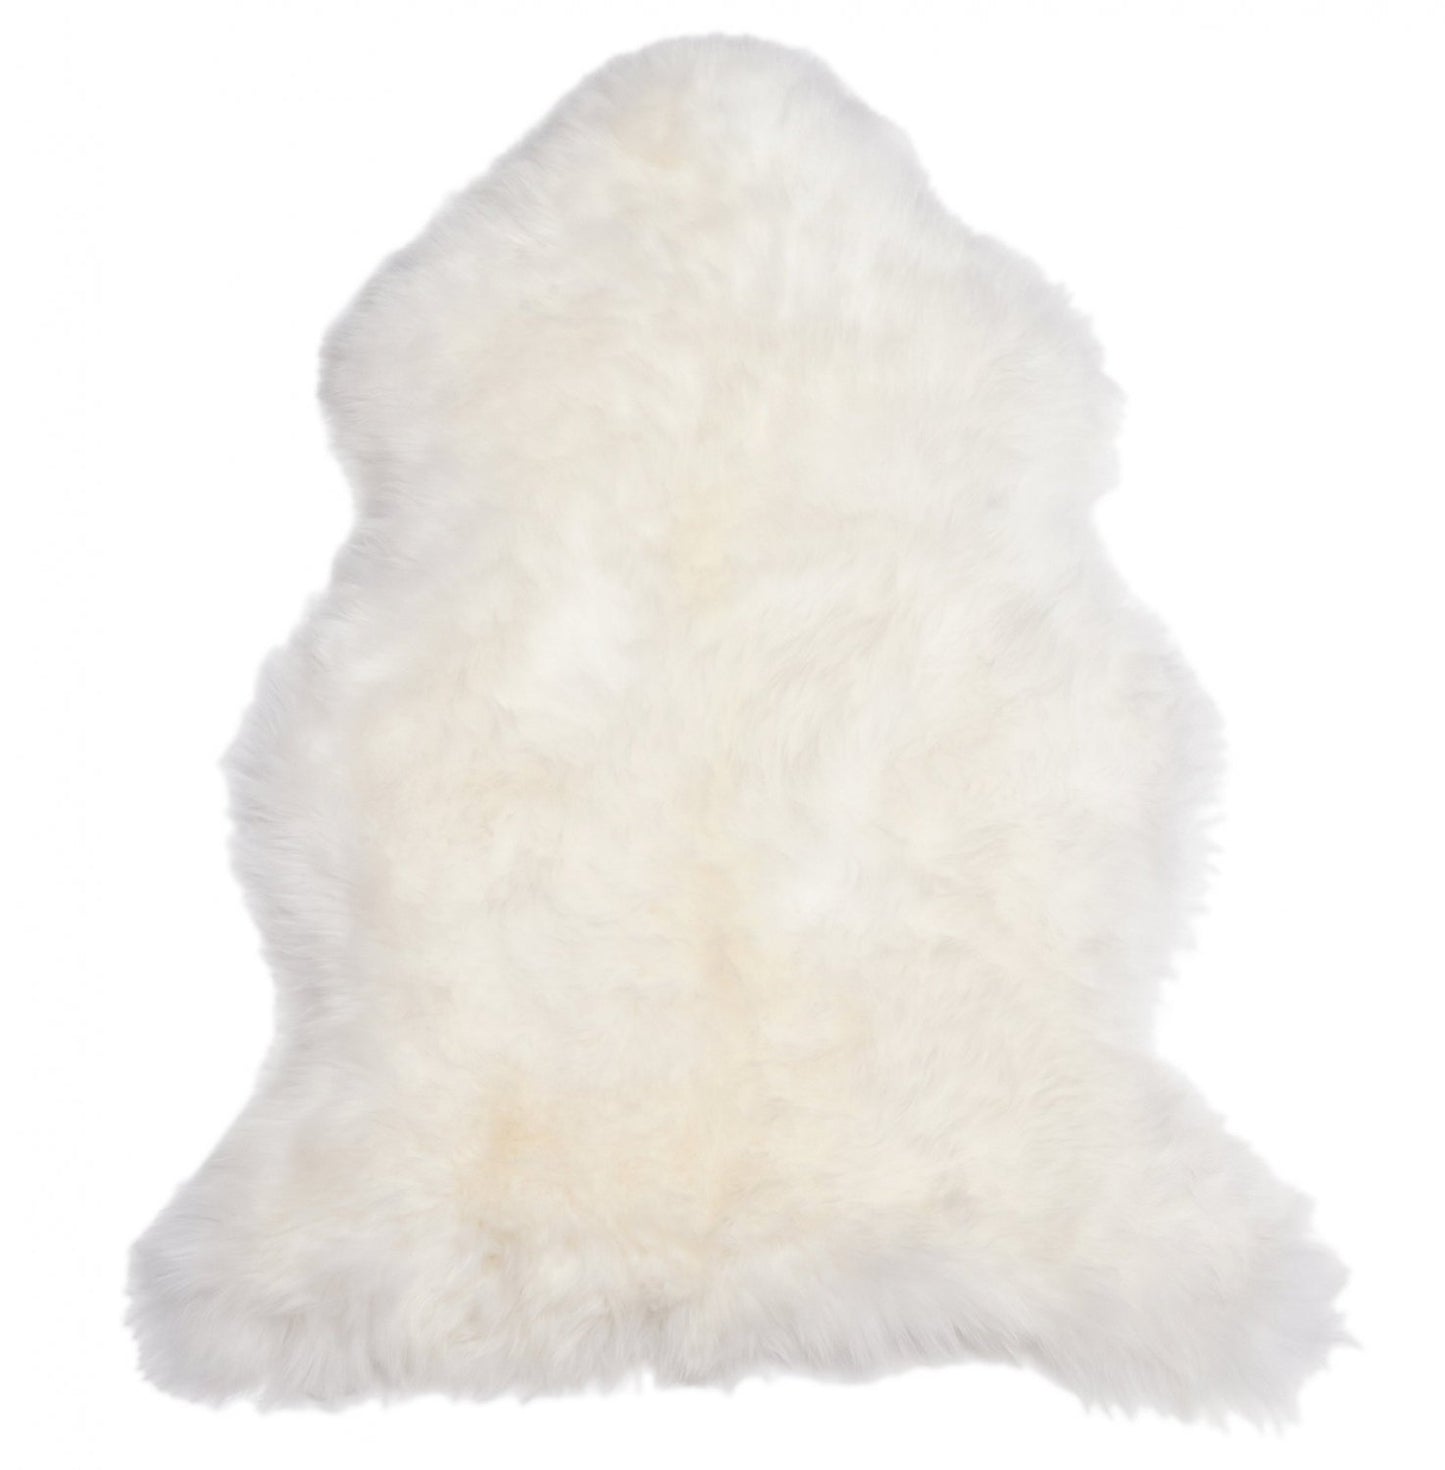 Fluffy Lambskin Rug. Premium Quality!  Sheepskin! About